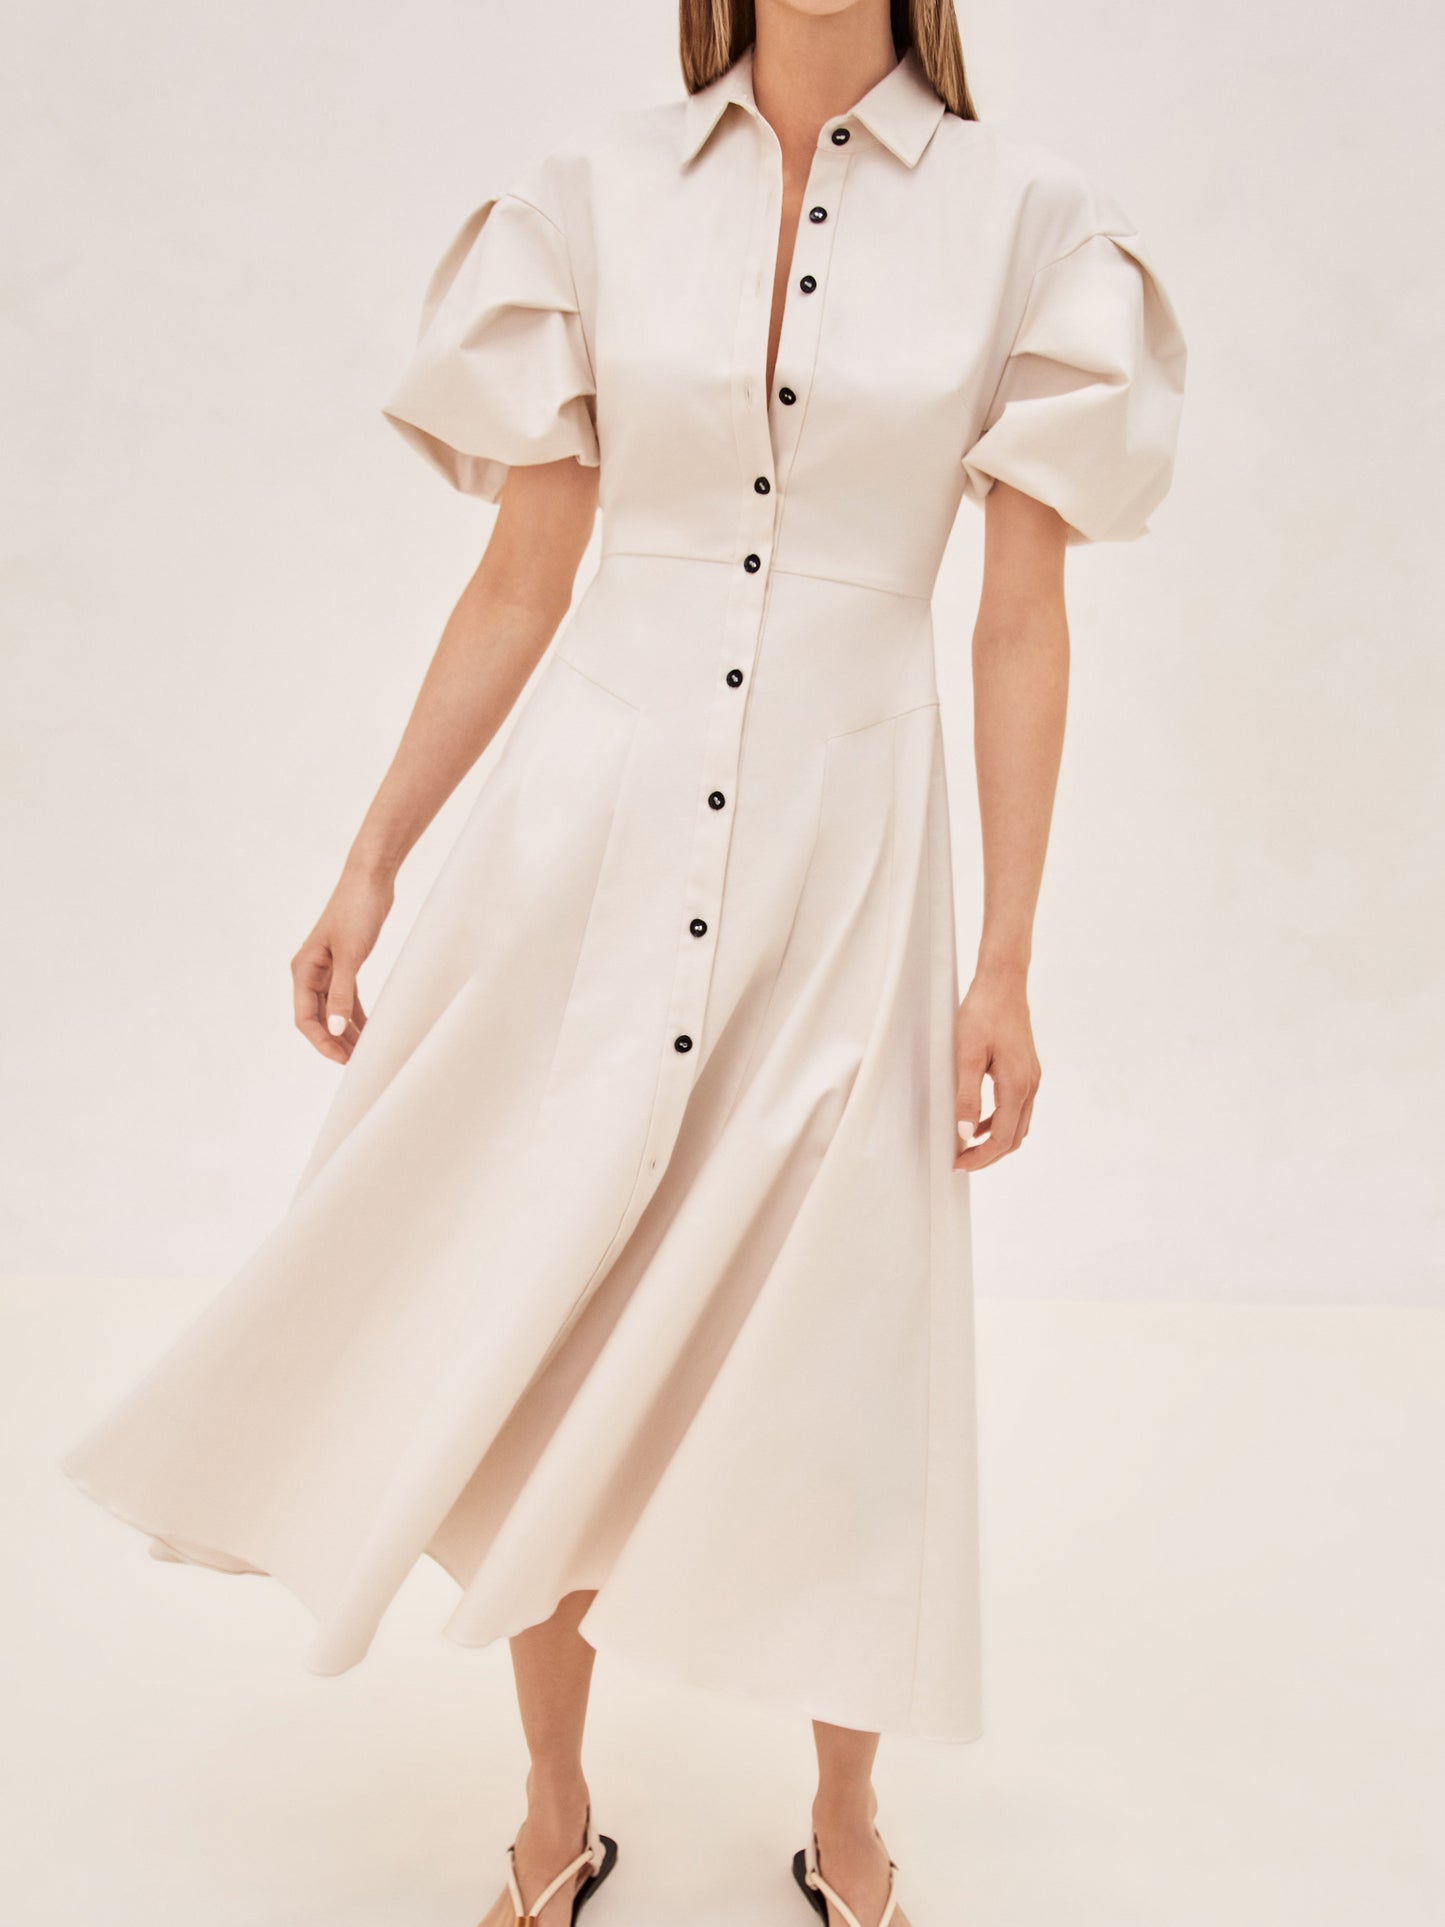 Alexis Amilya Midi Dress in cream hover image